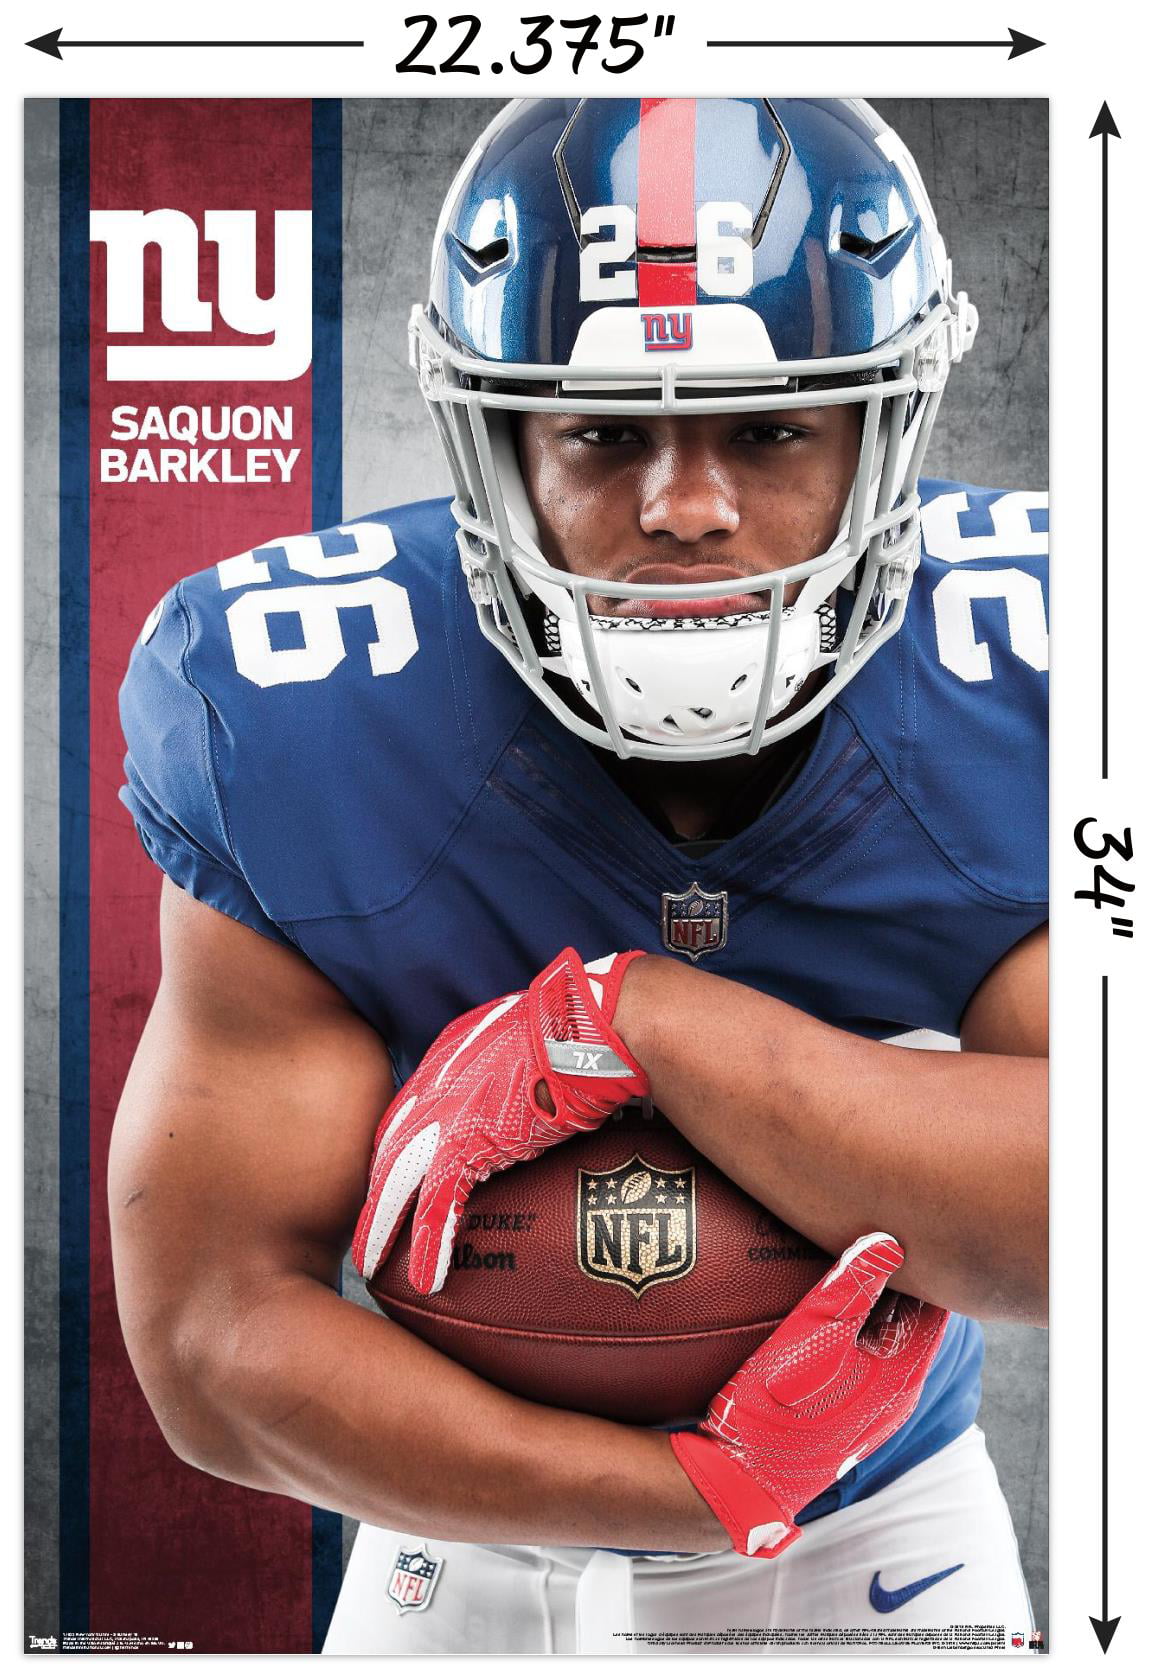 NFL New York Giants - Saquon Barkley 18 Wall Poster, 22.375 x 34